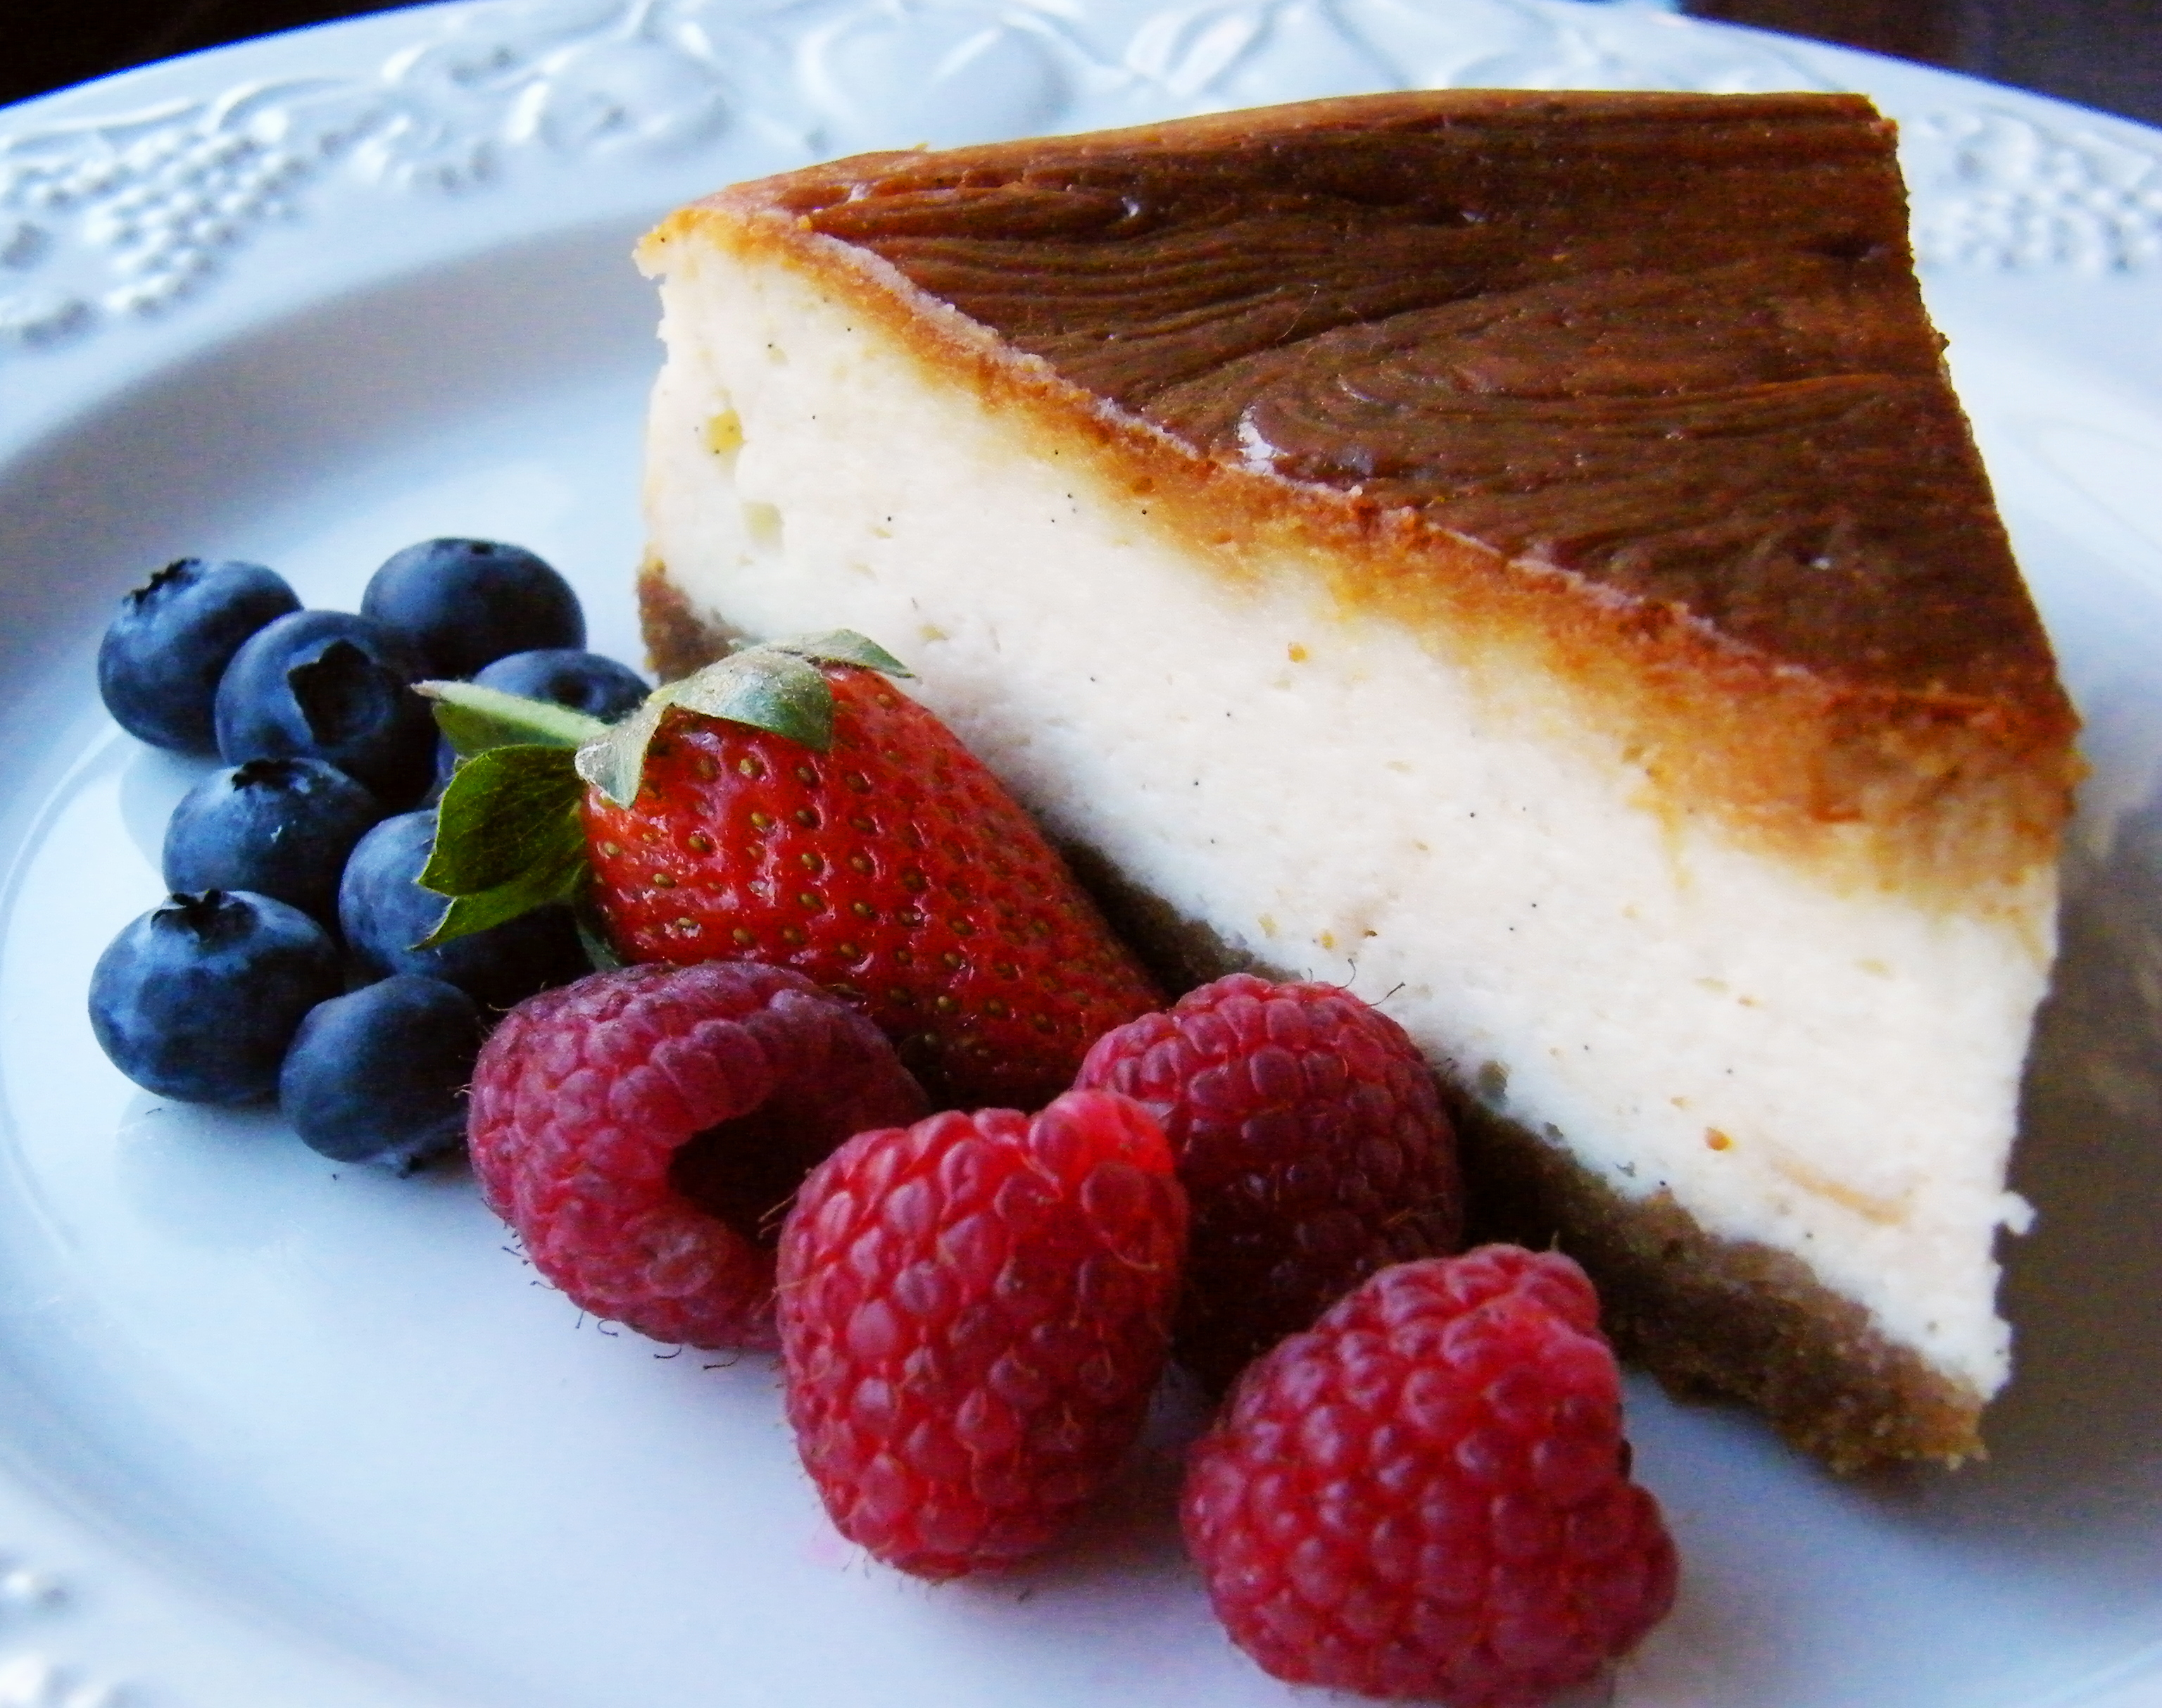 Baked_cheesecake_with_raspberries_and_blueberries.jpg